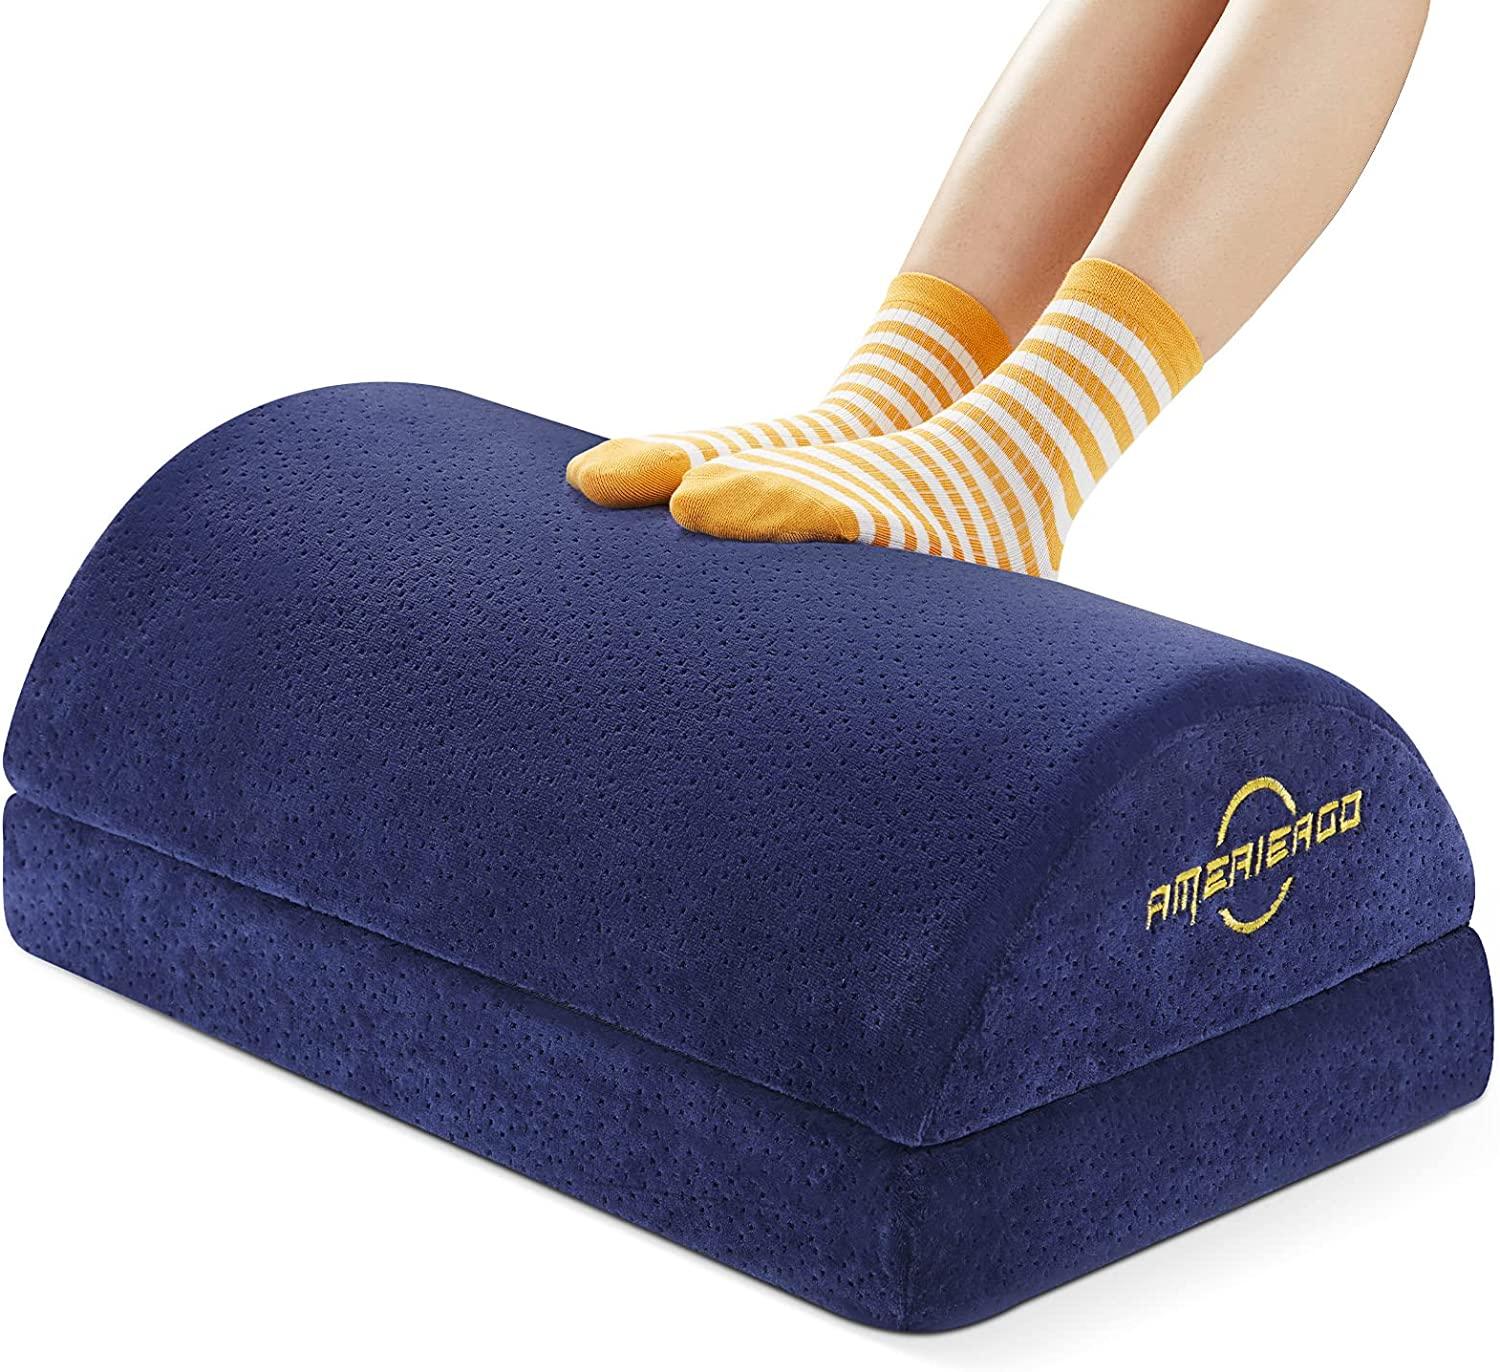 Ergonomic Memory Foam Foot Stool Cushion for $14.99 Shipped